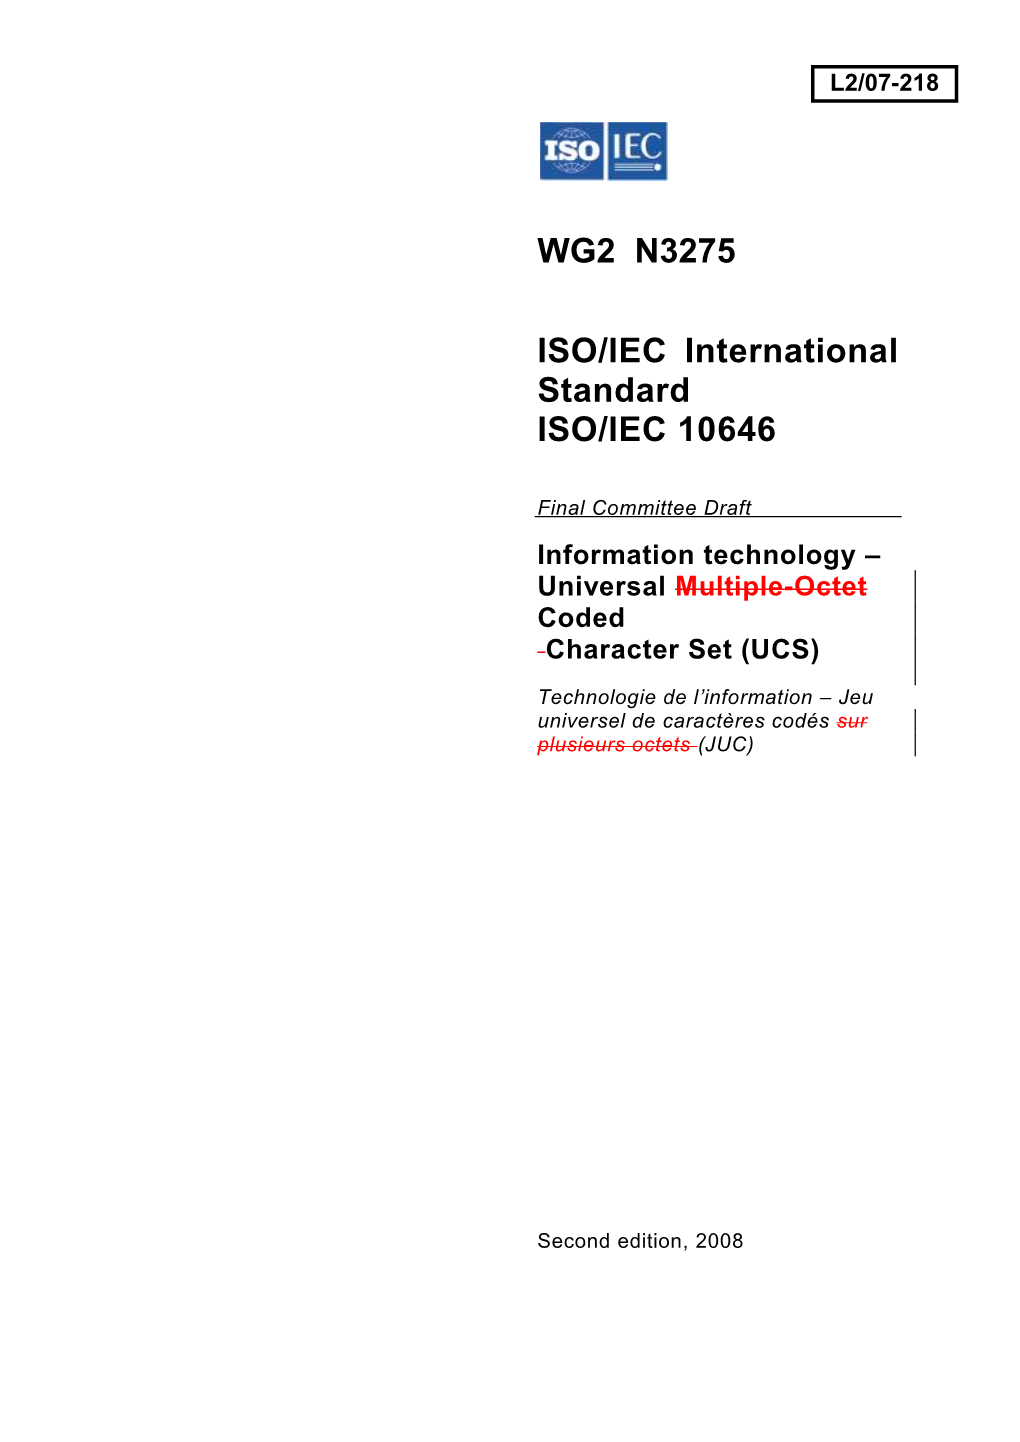 WG2 N3275 ISO/IEC International Standard ISO/IEC 10646